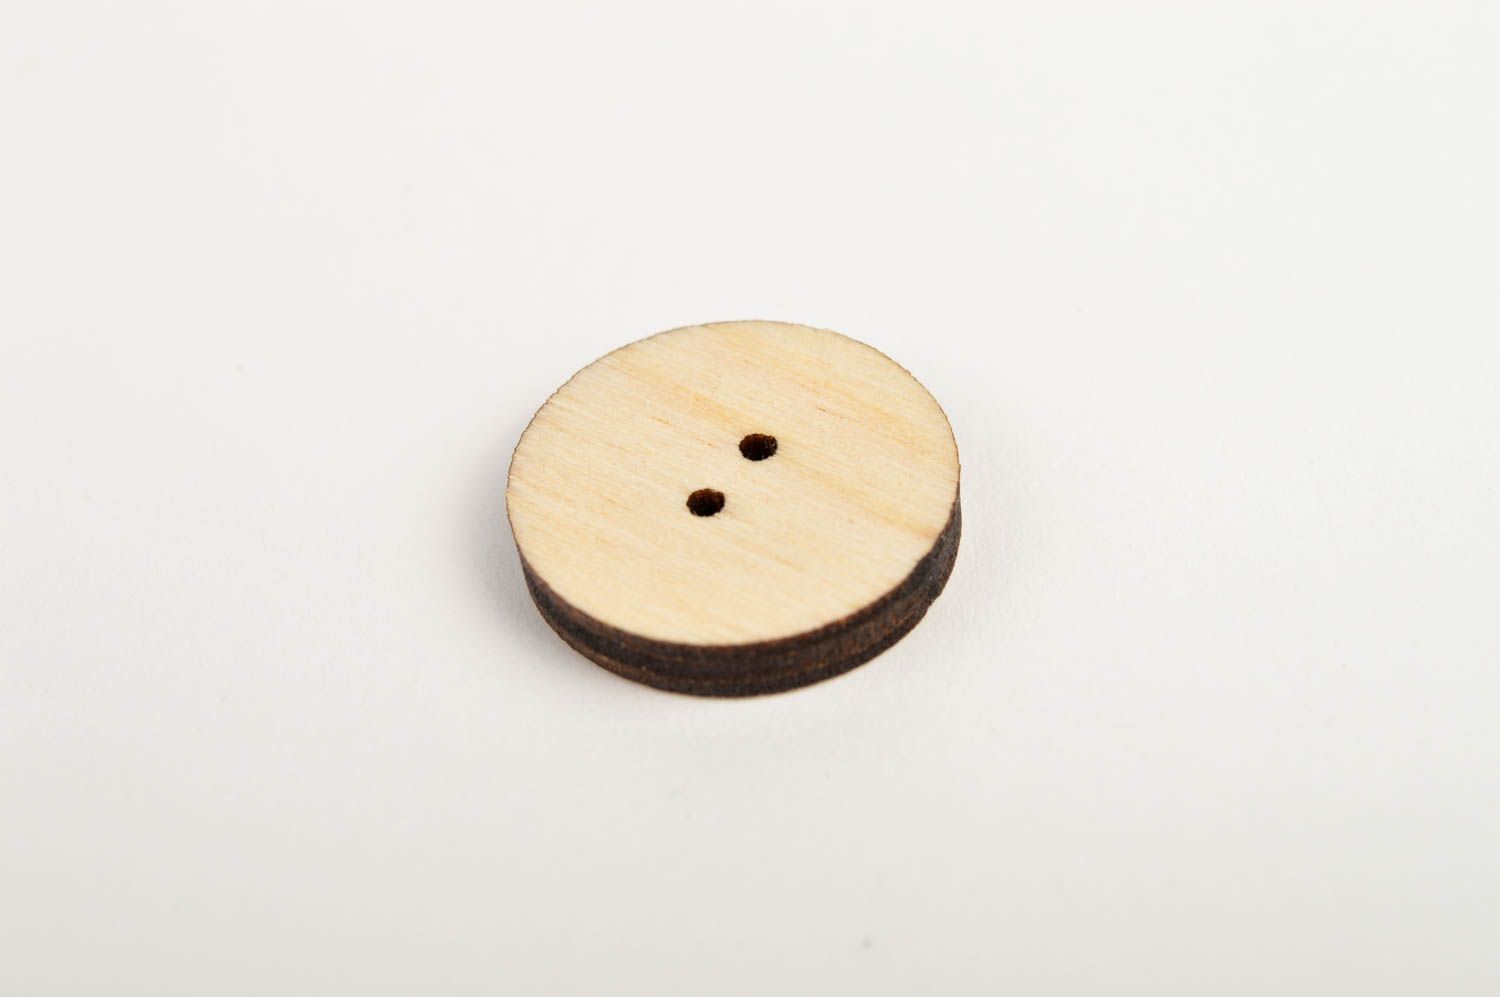 Handmade wooden blank button needlework supplies gift ideas for girls photo 5